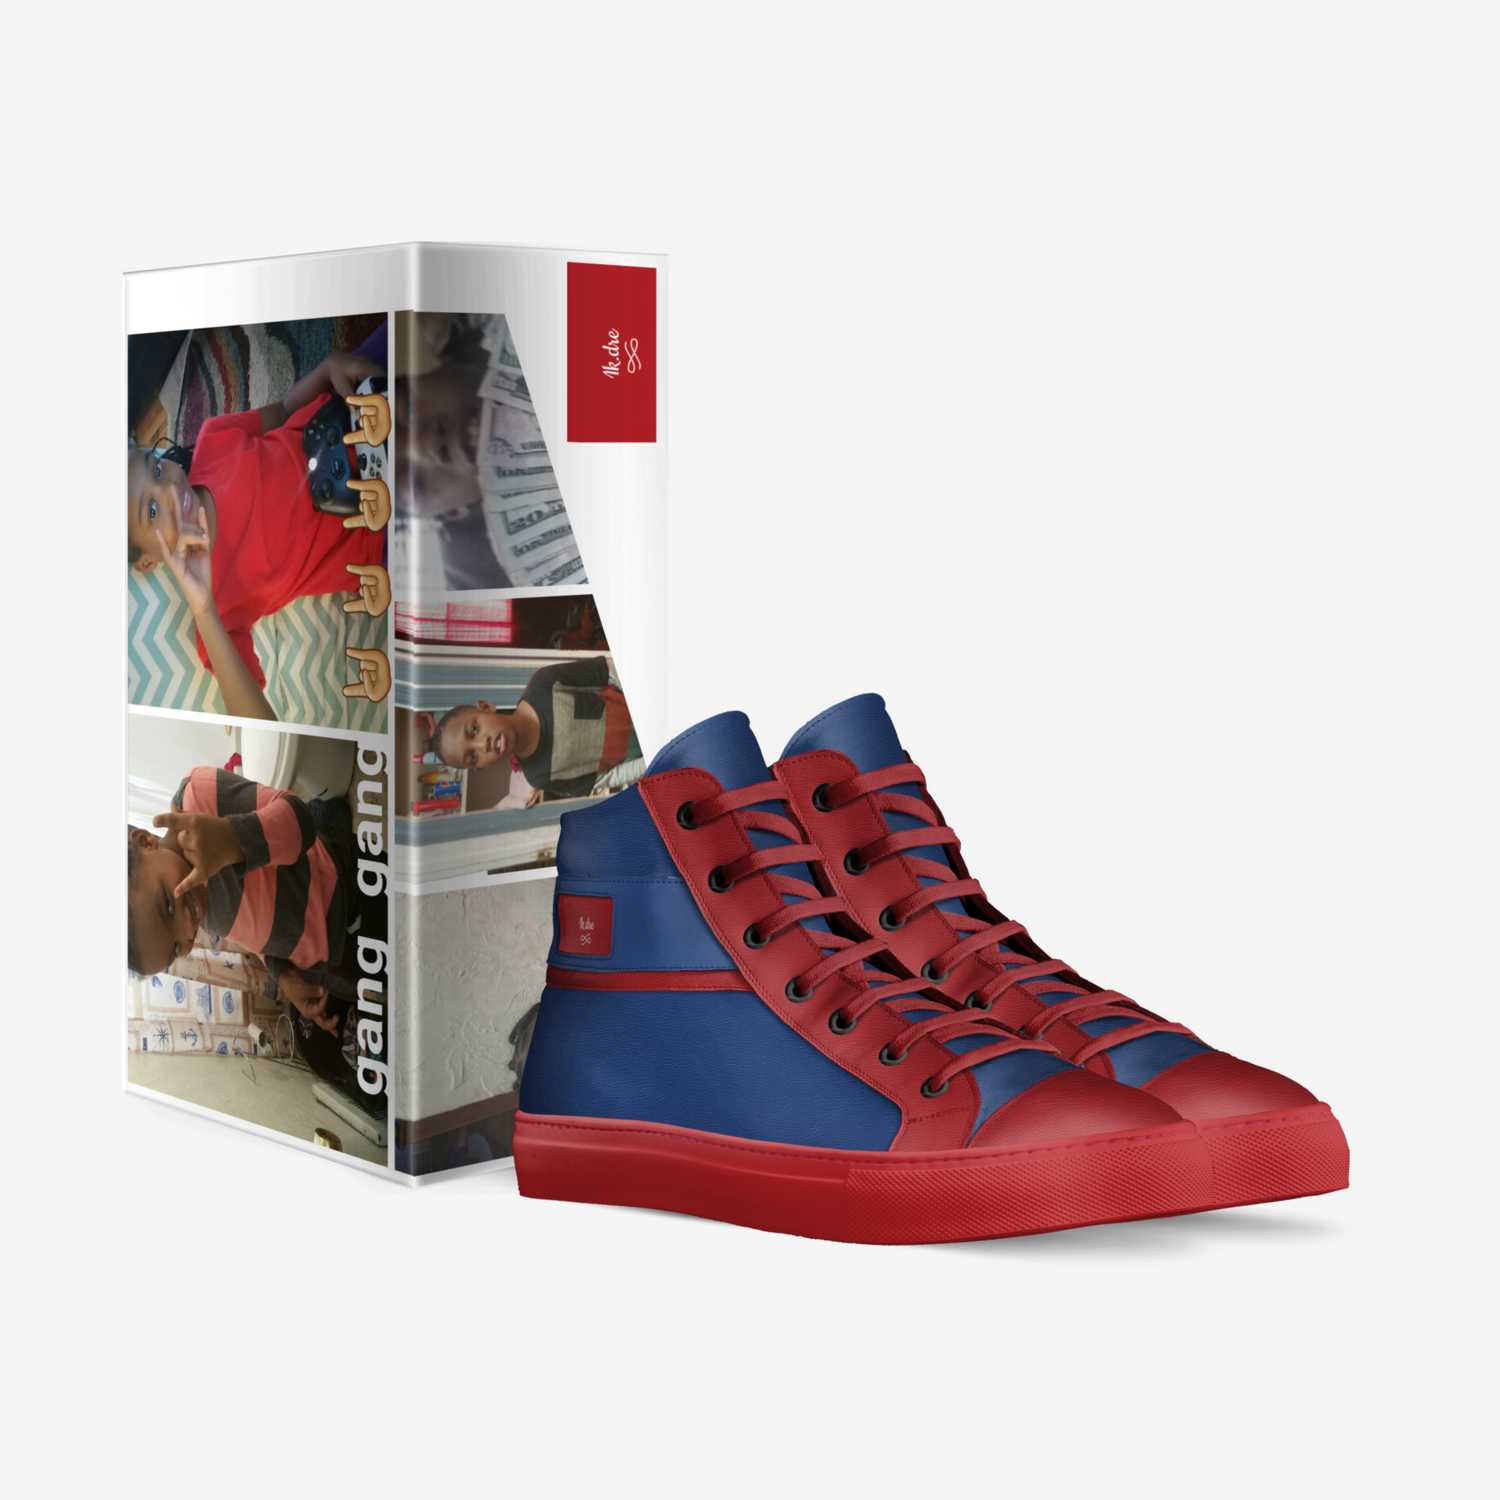 1k.dre custom made in Italy shoes by Leandrea Stuart Jr | Box view